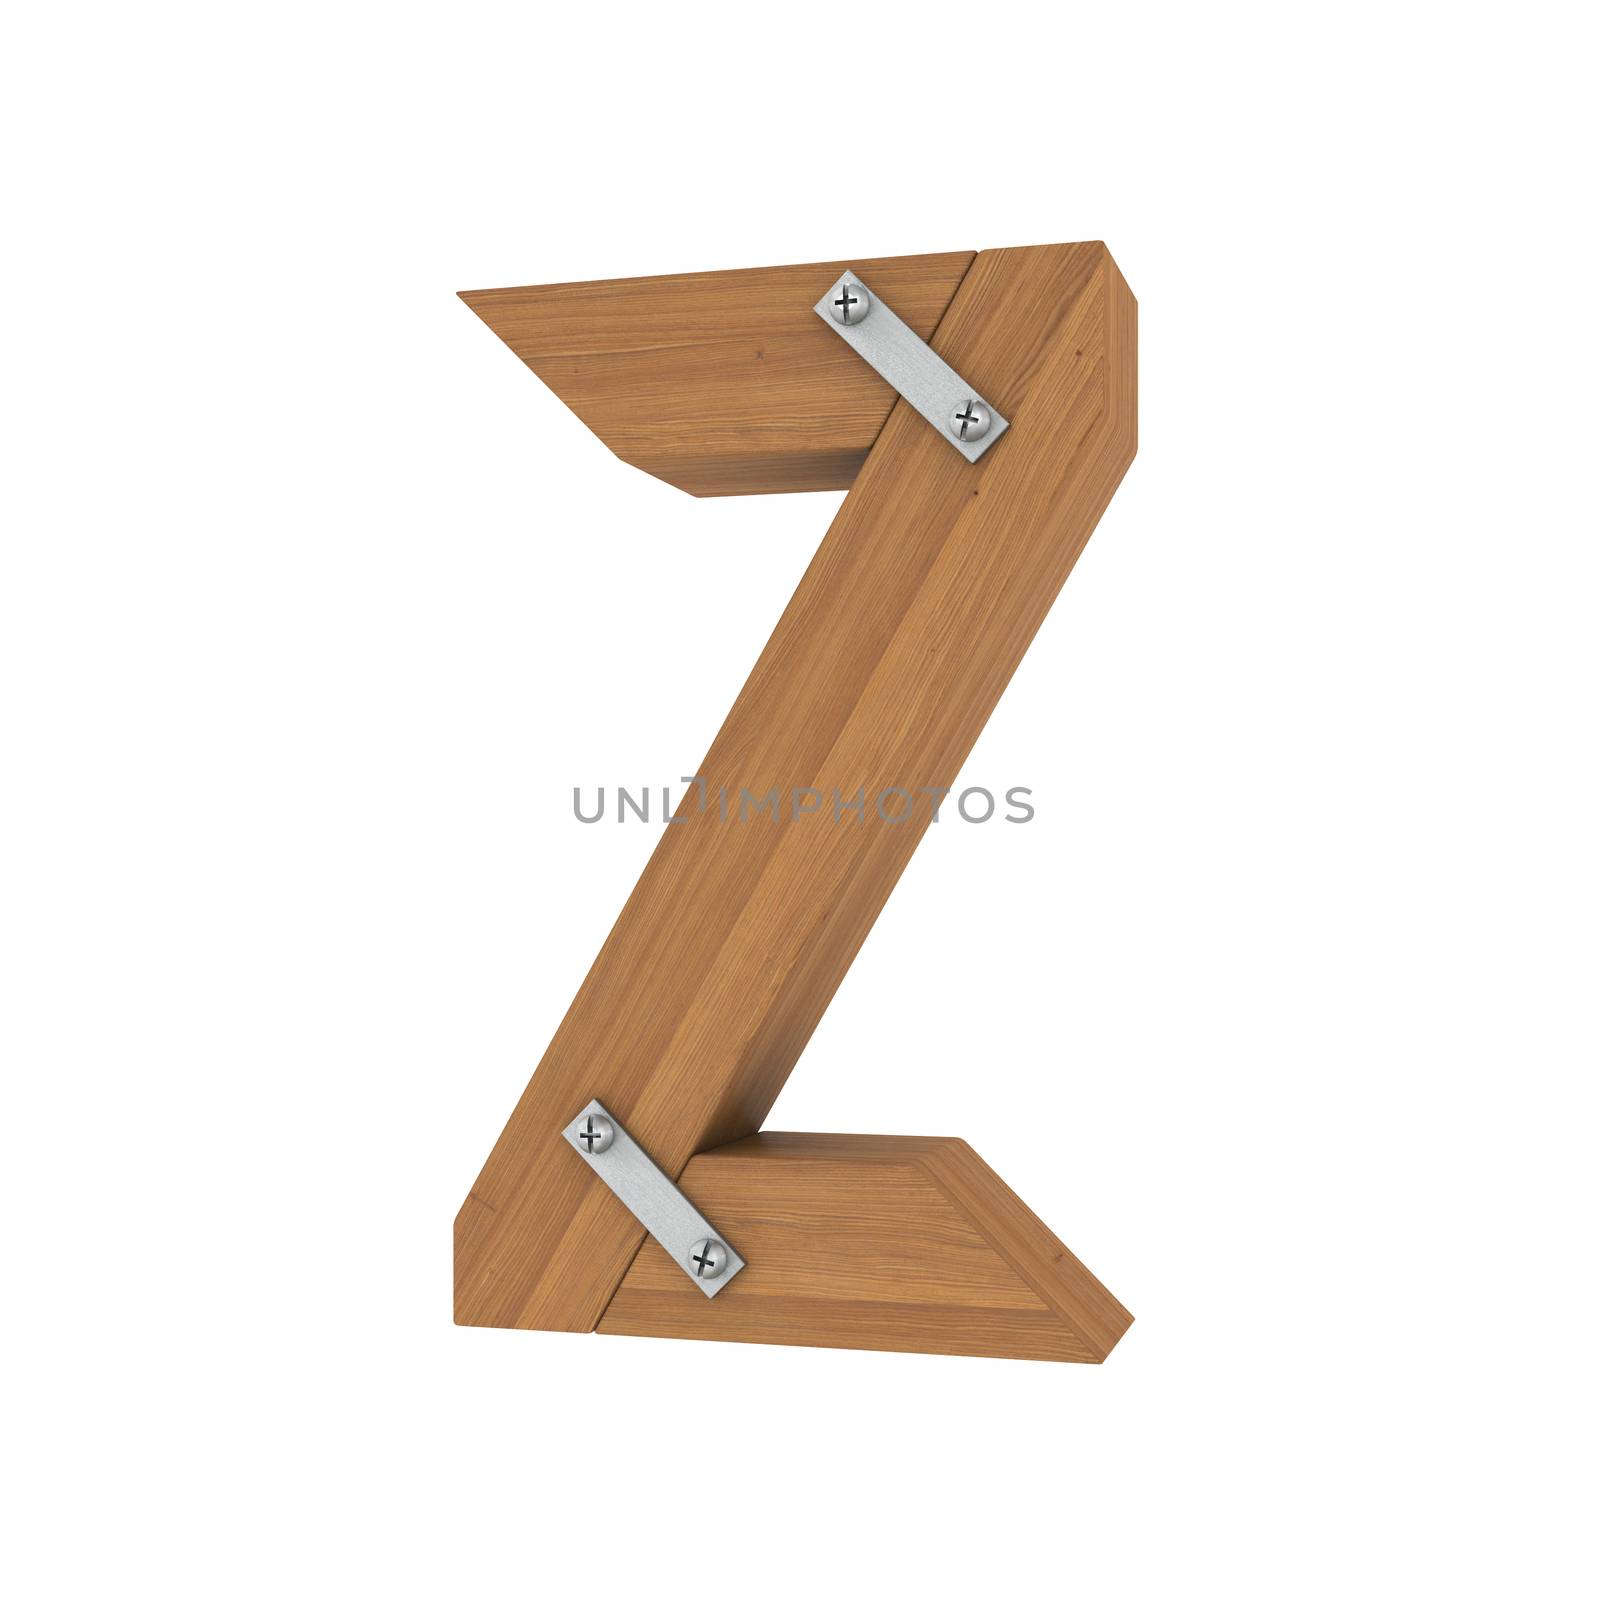 Wooden letter Z by cherezoff